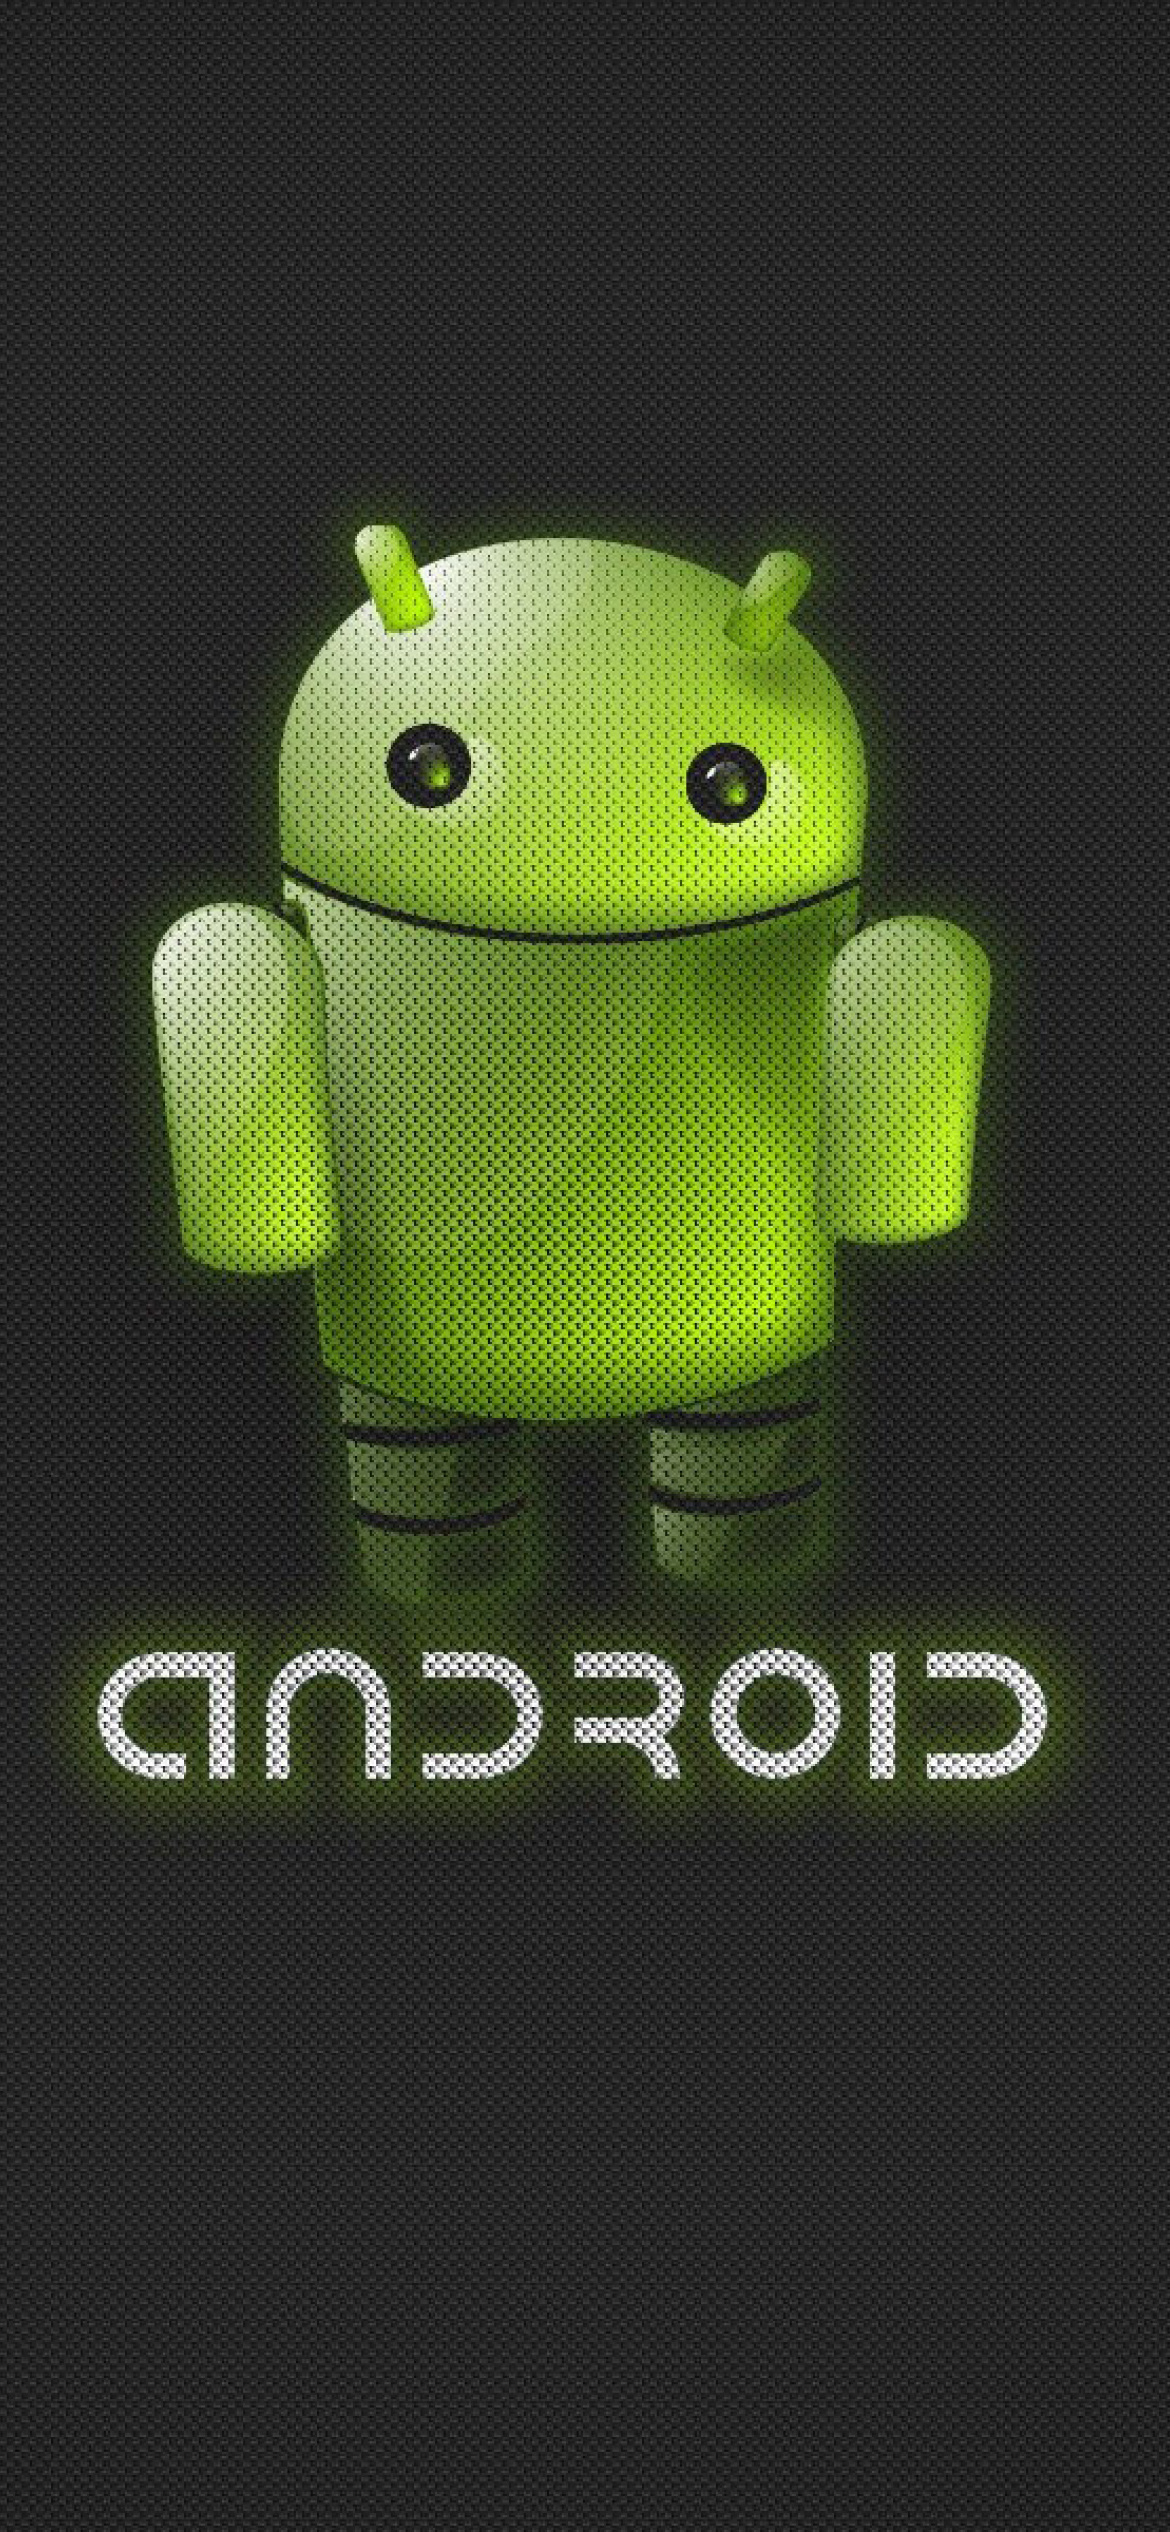 Android 5.0 Lollipop wallpaper 1170x2532